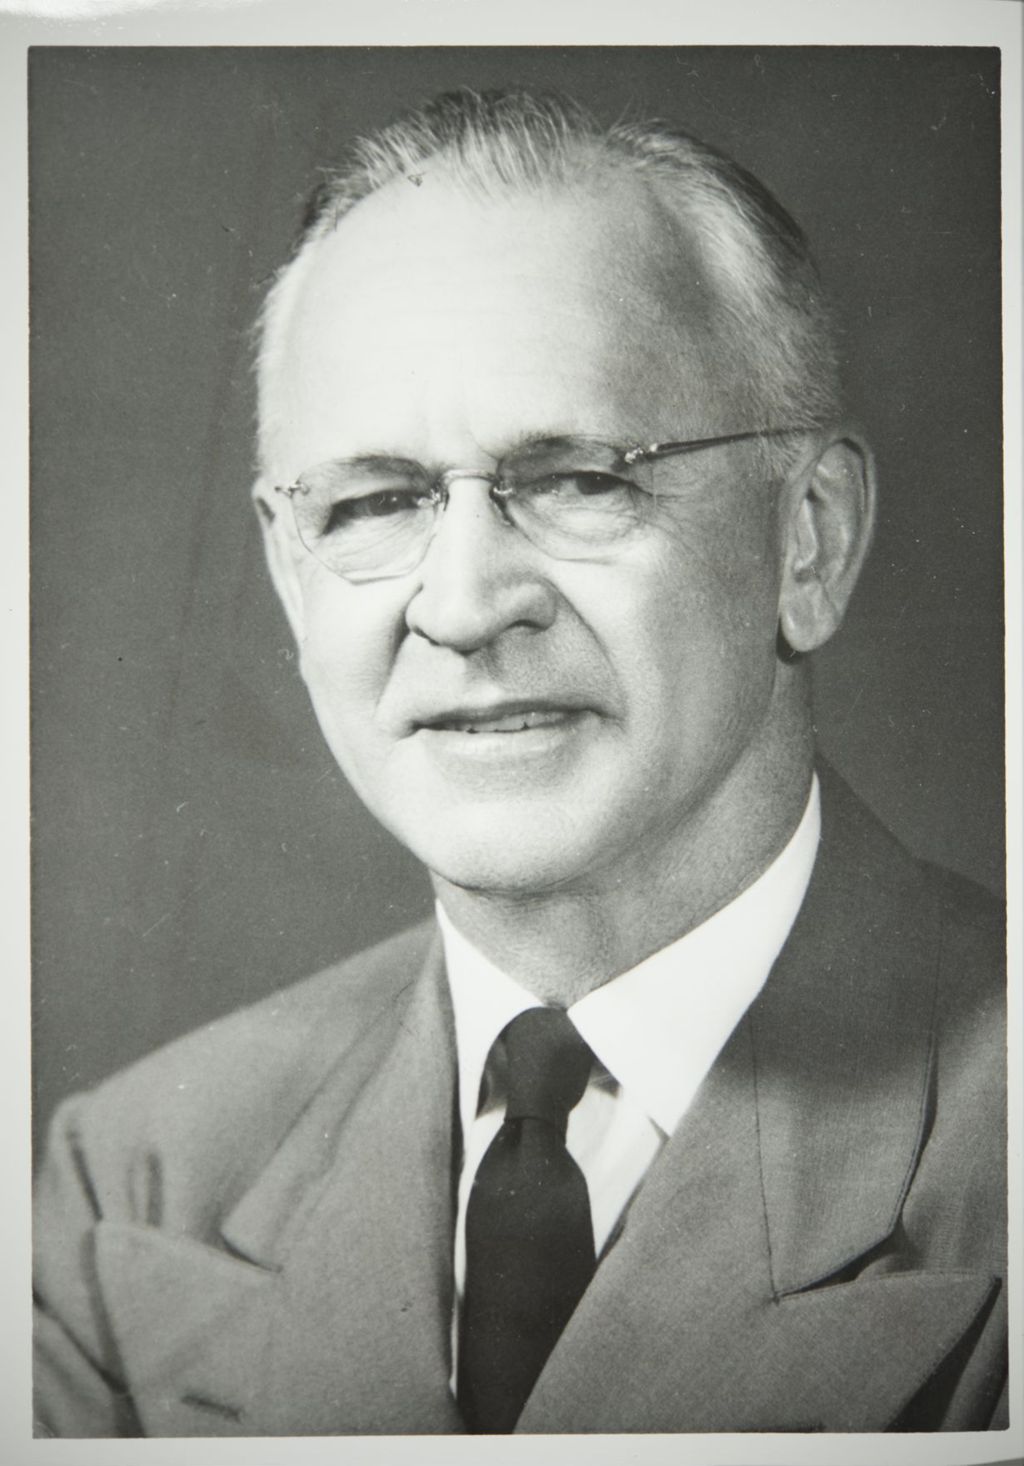 Miniature of Board of Trustees member Harold Pogue